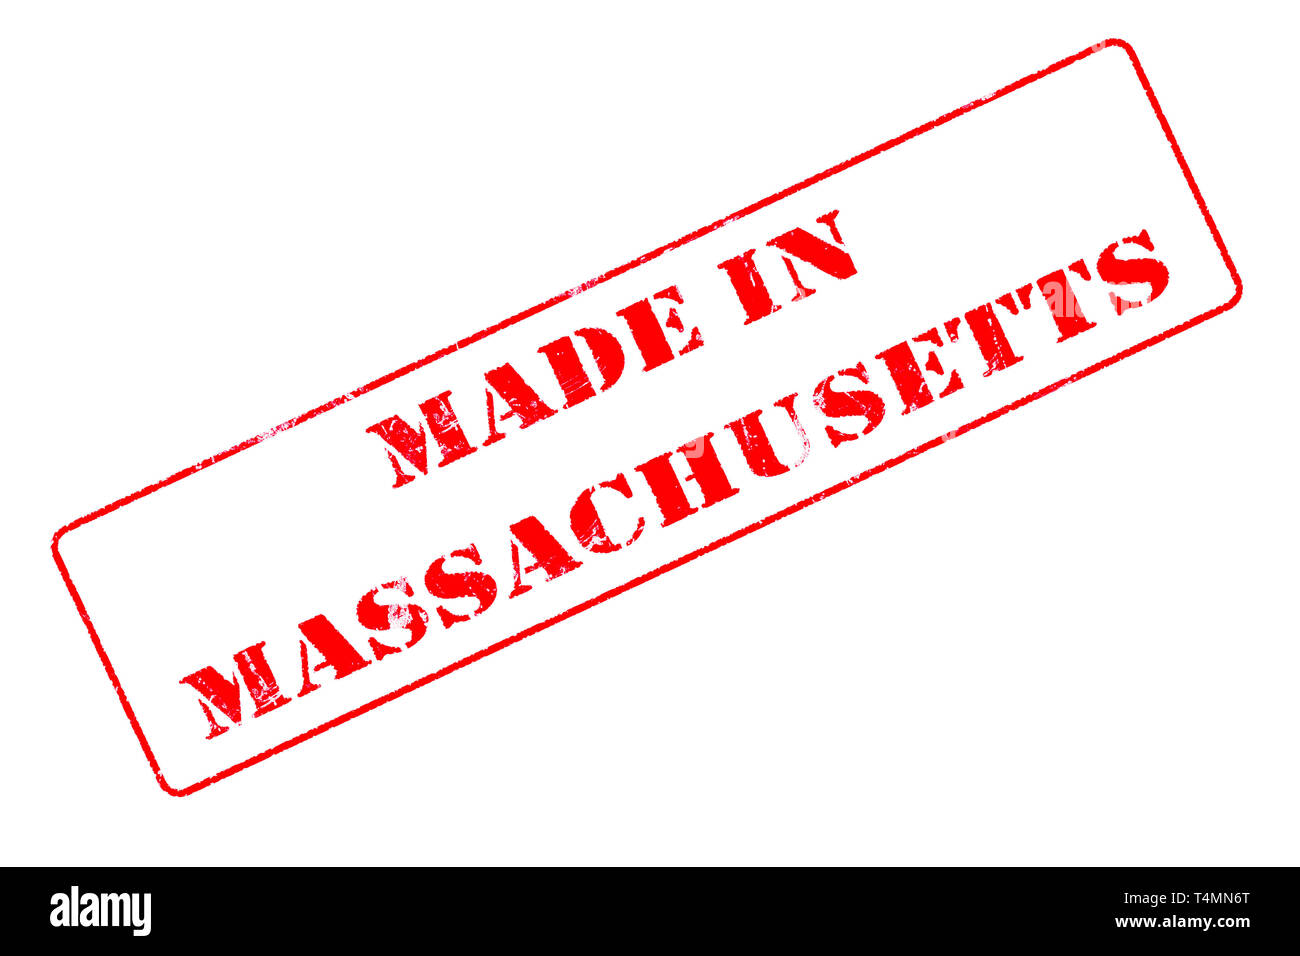 Gummistempel Konzept mit einem roten Stempel Lesung in Massachusetts Stockfoto